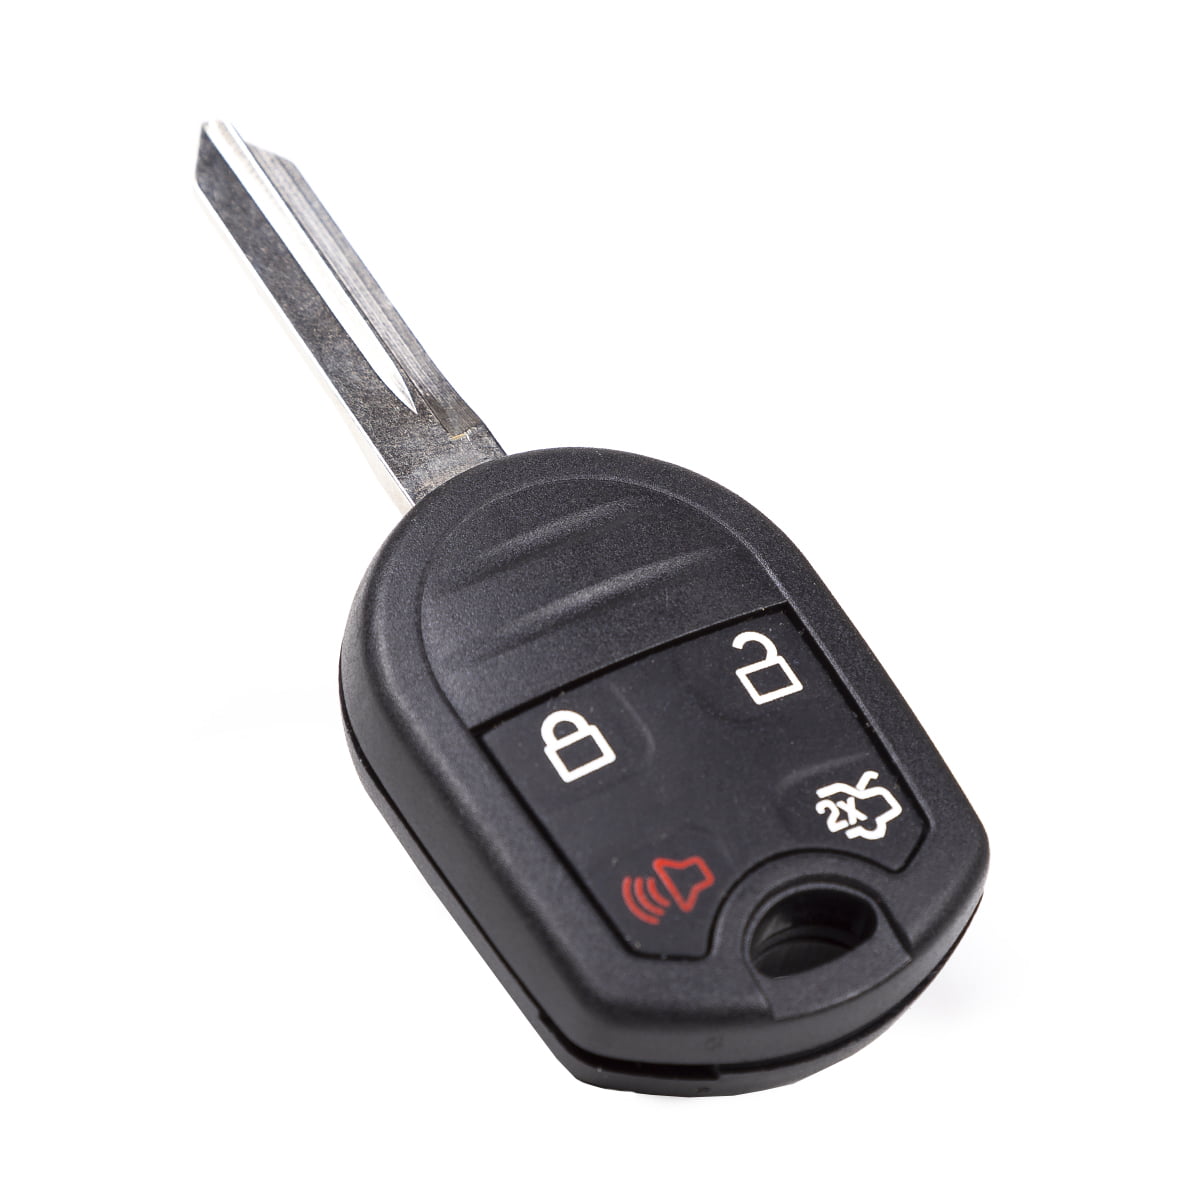 2 Remote for 2001 2002 2003 2004 2005 2006 2007 2008 2009 Mercury Sable Car Key